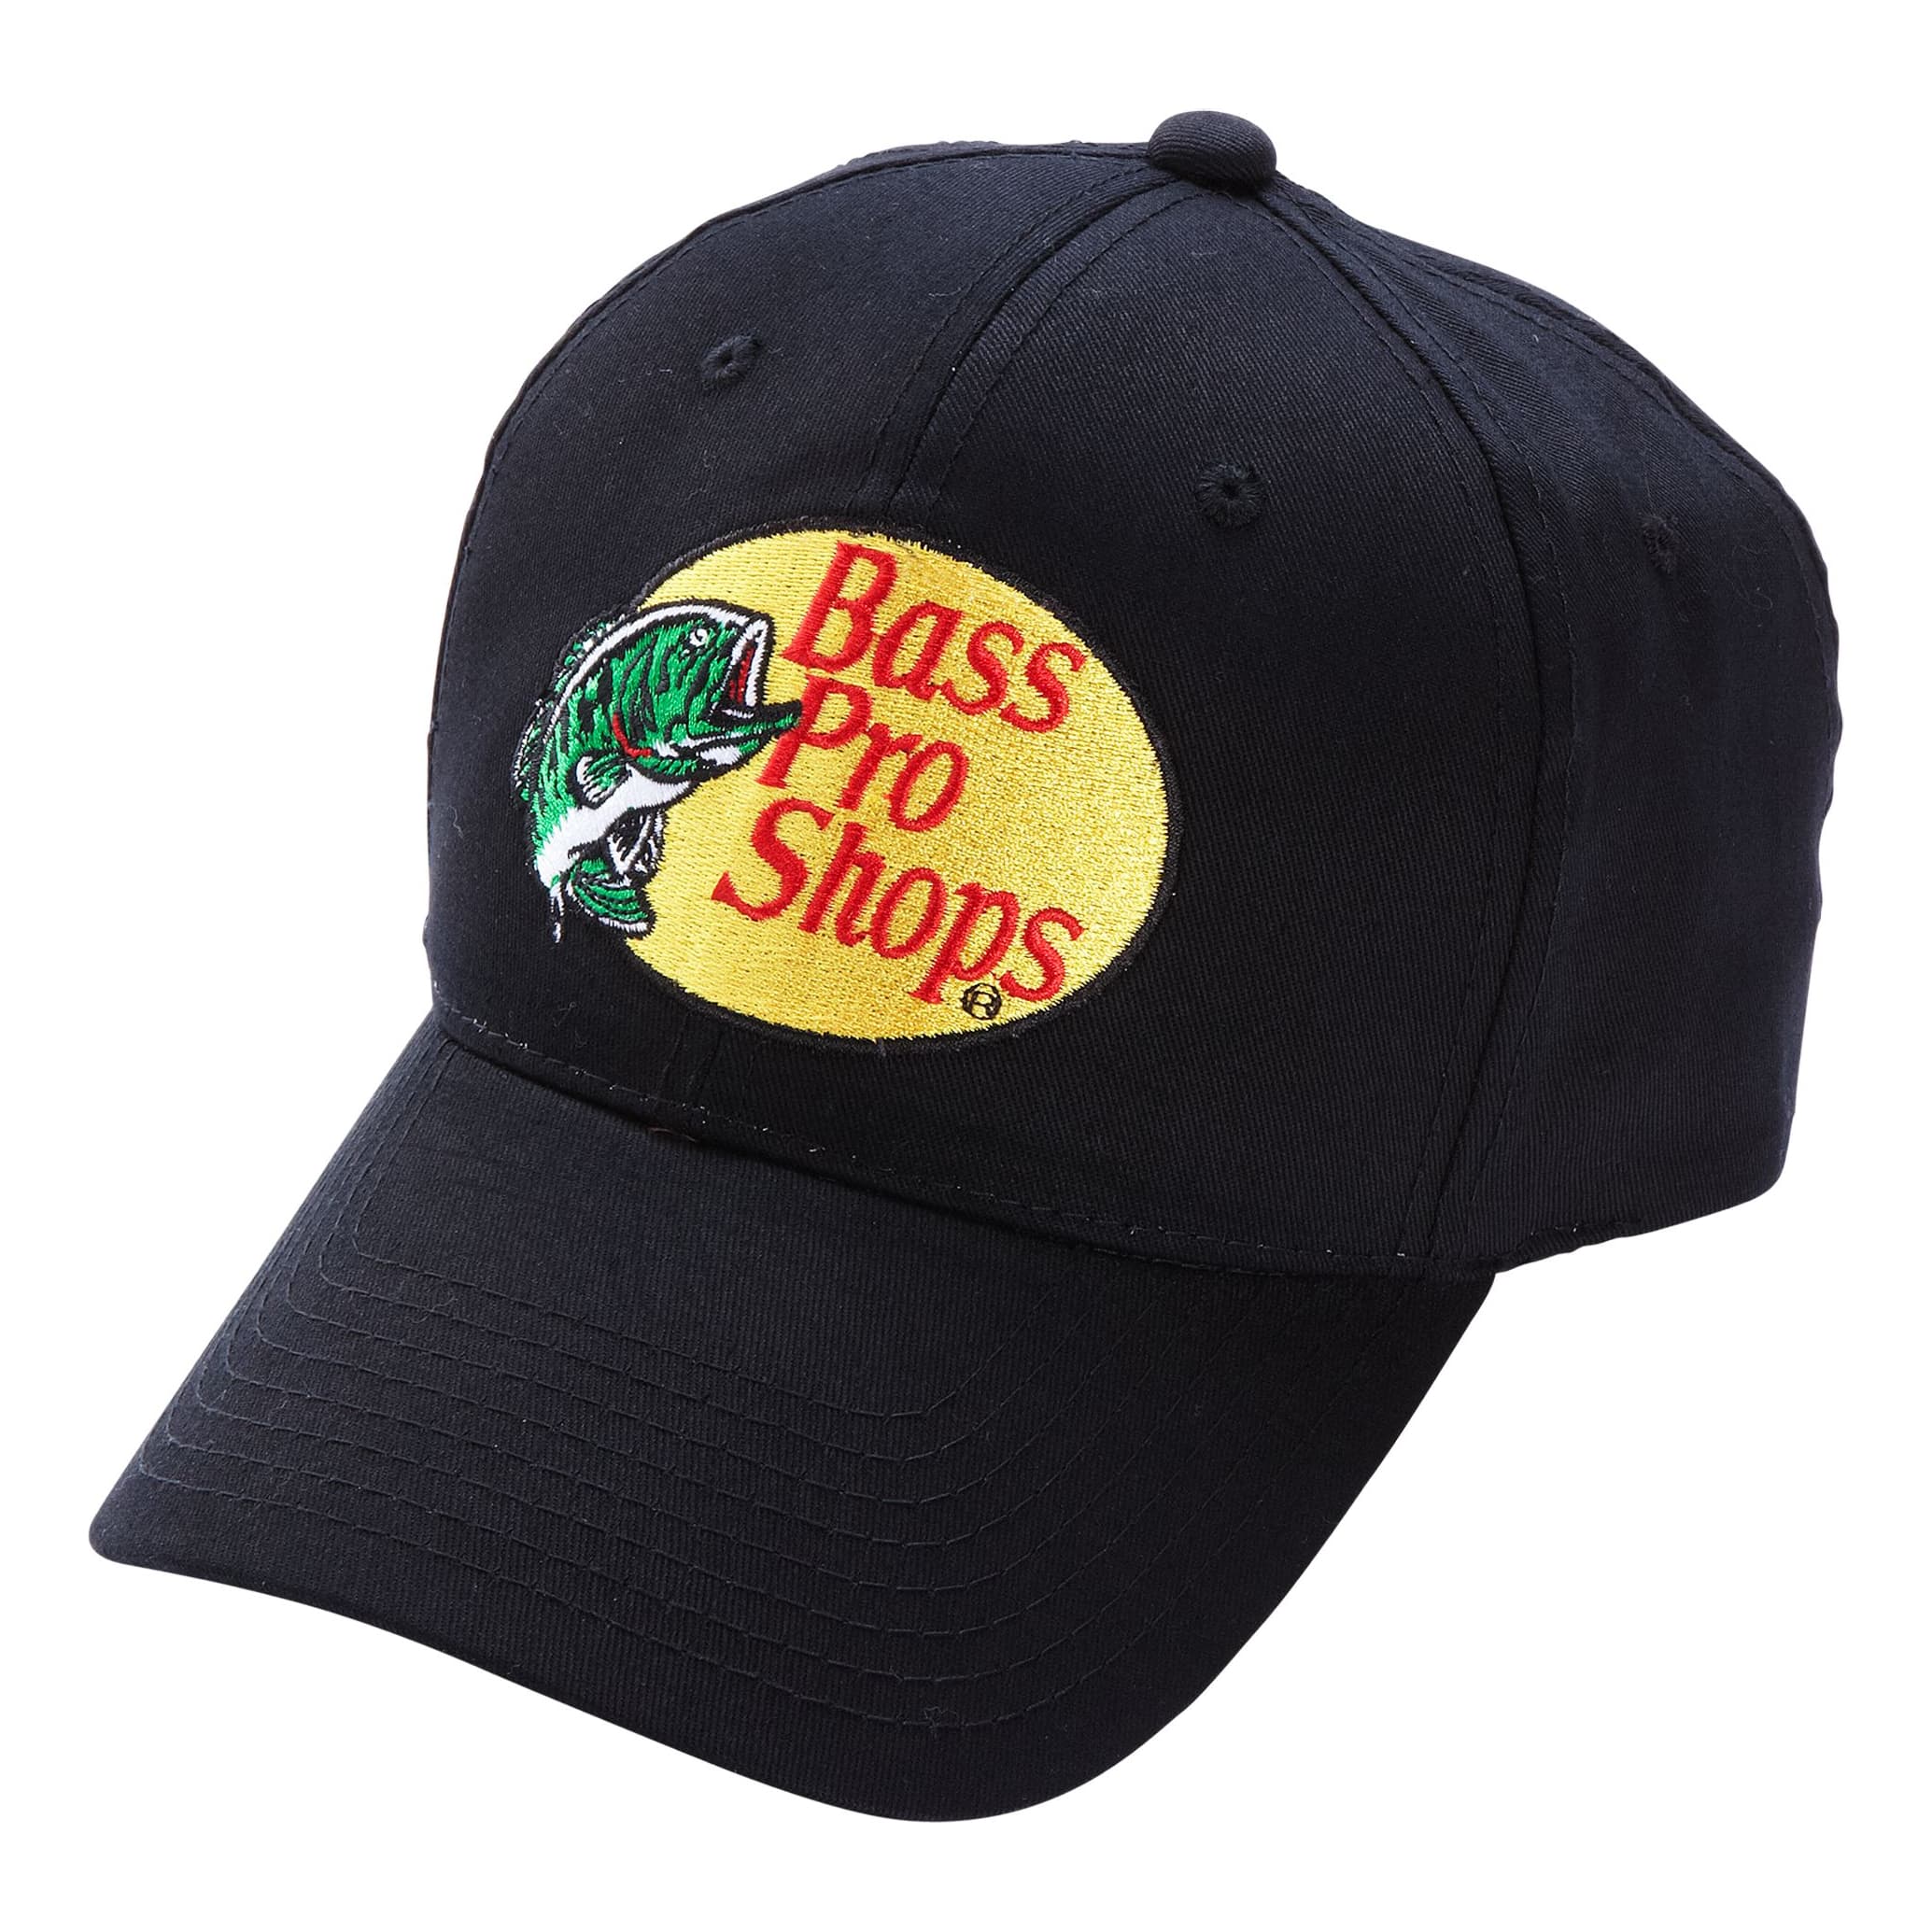 Bass Pro Shops® Twill Cap - Black